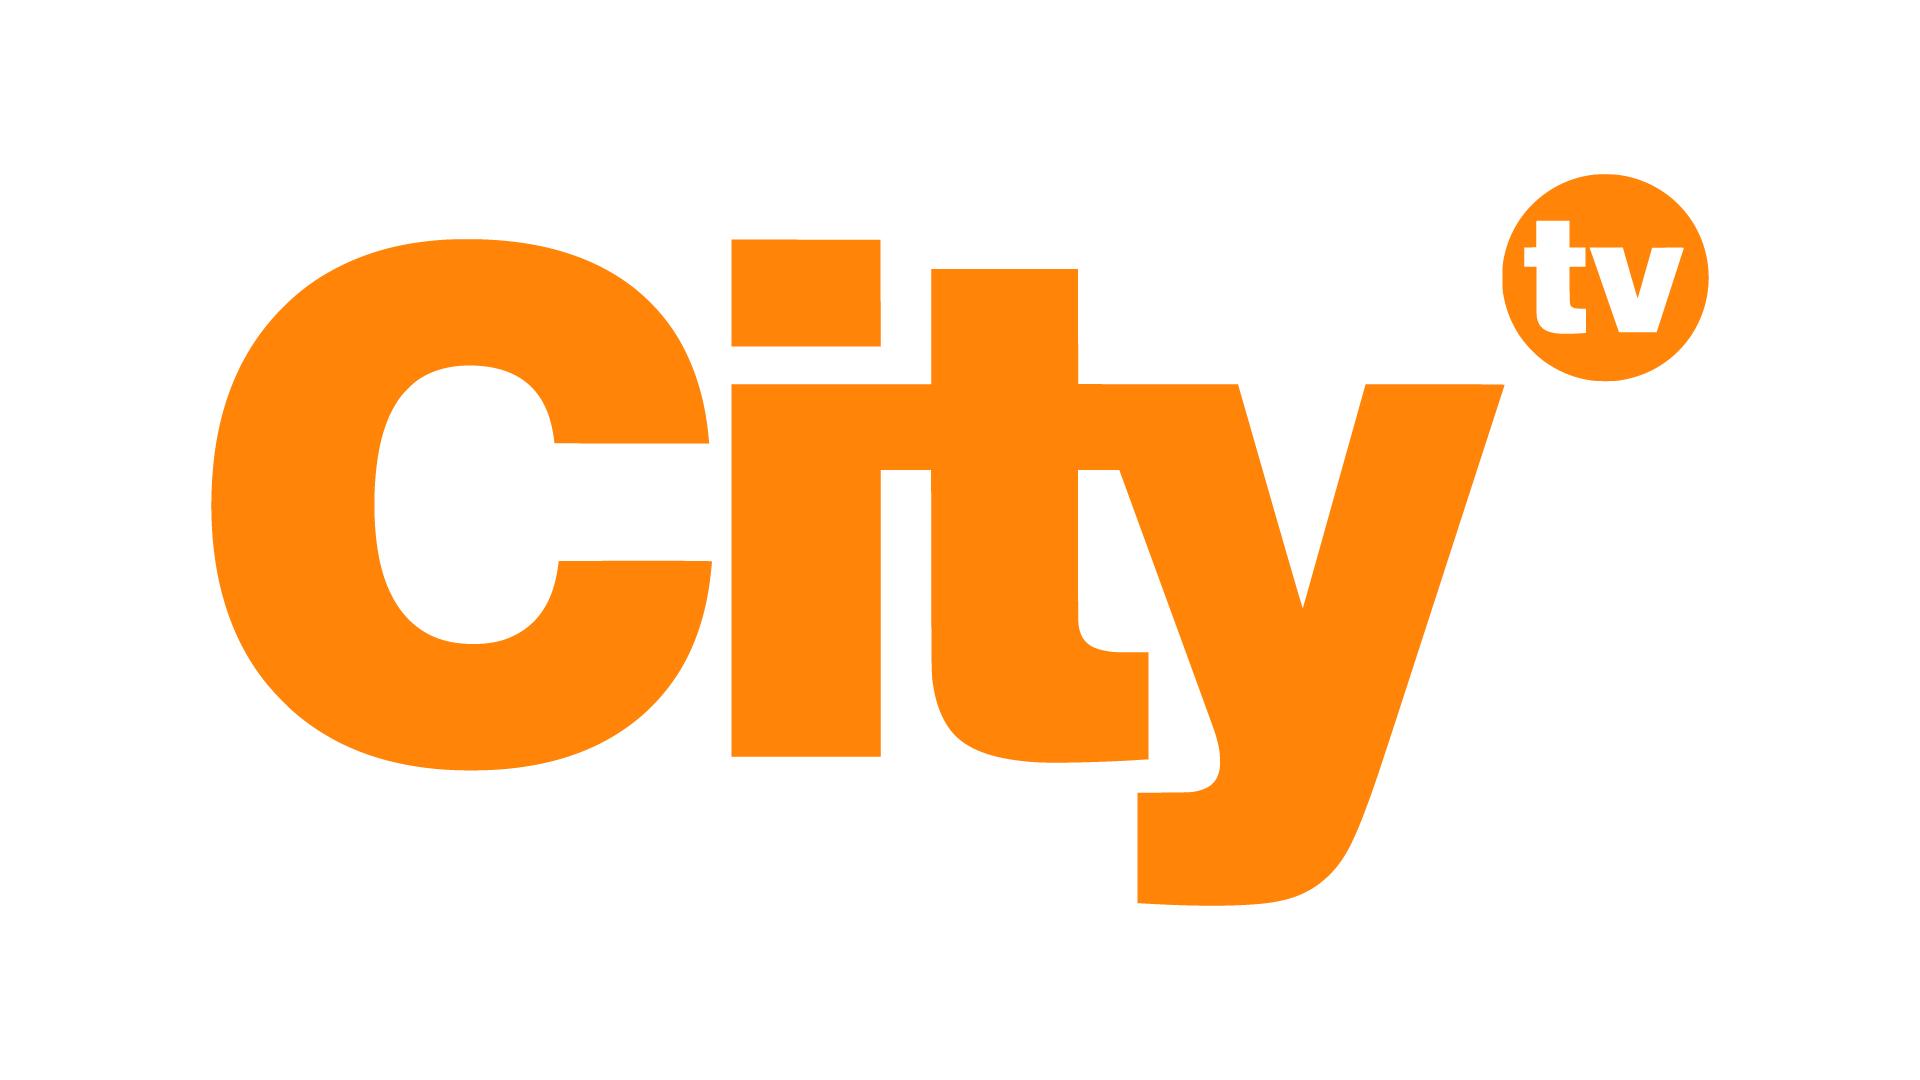 Assistir Citytv Online